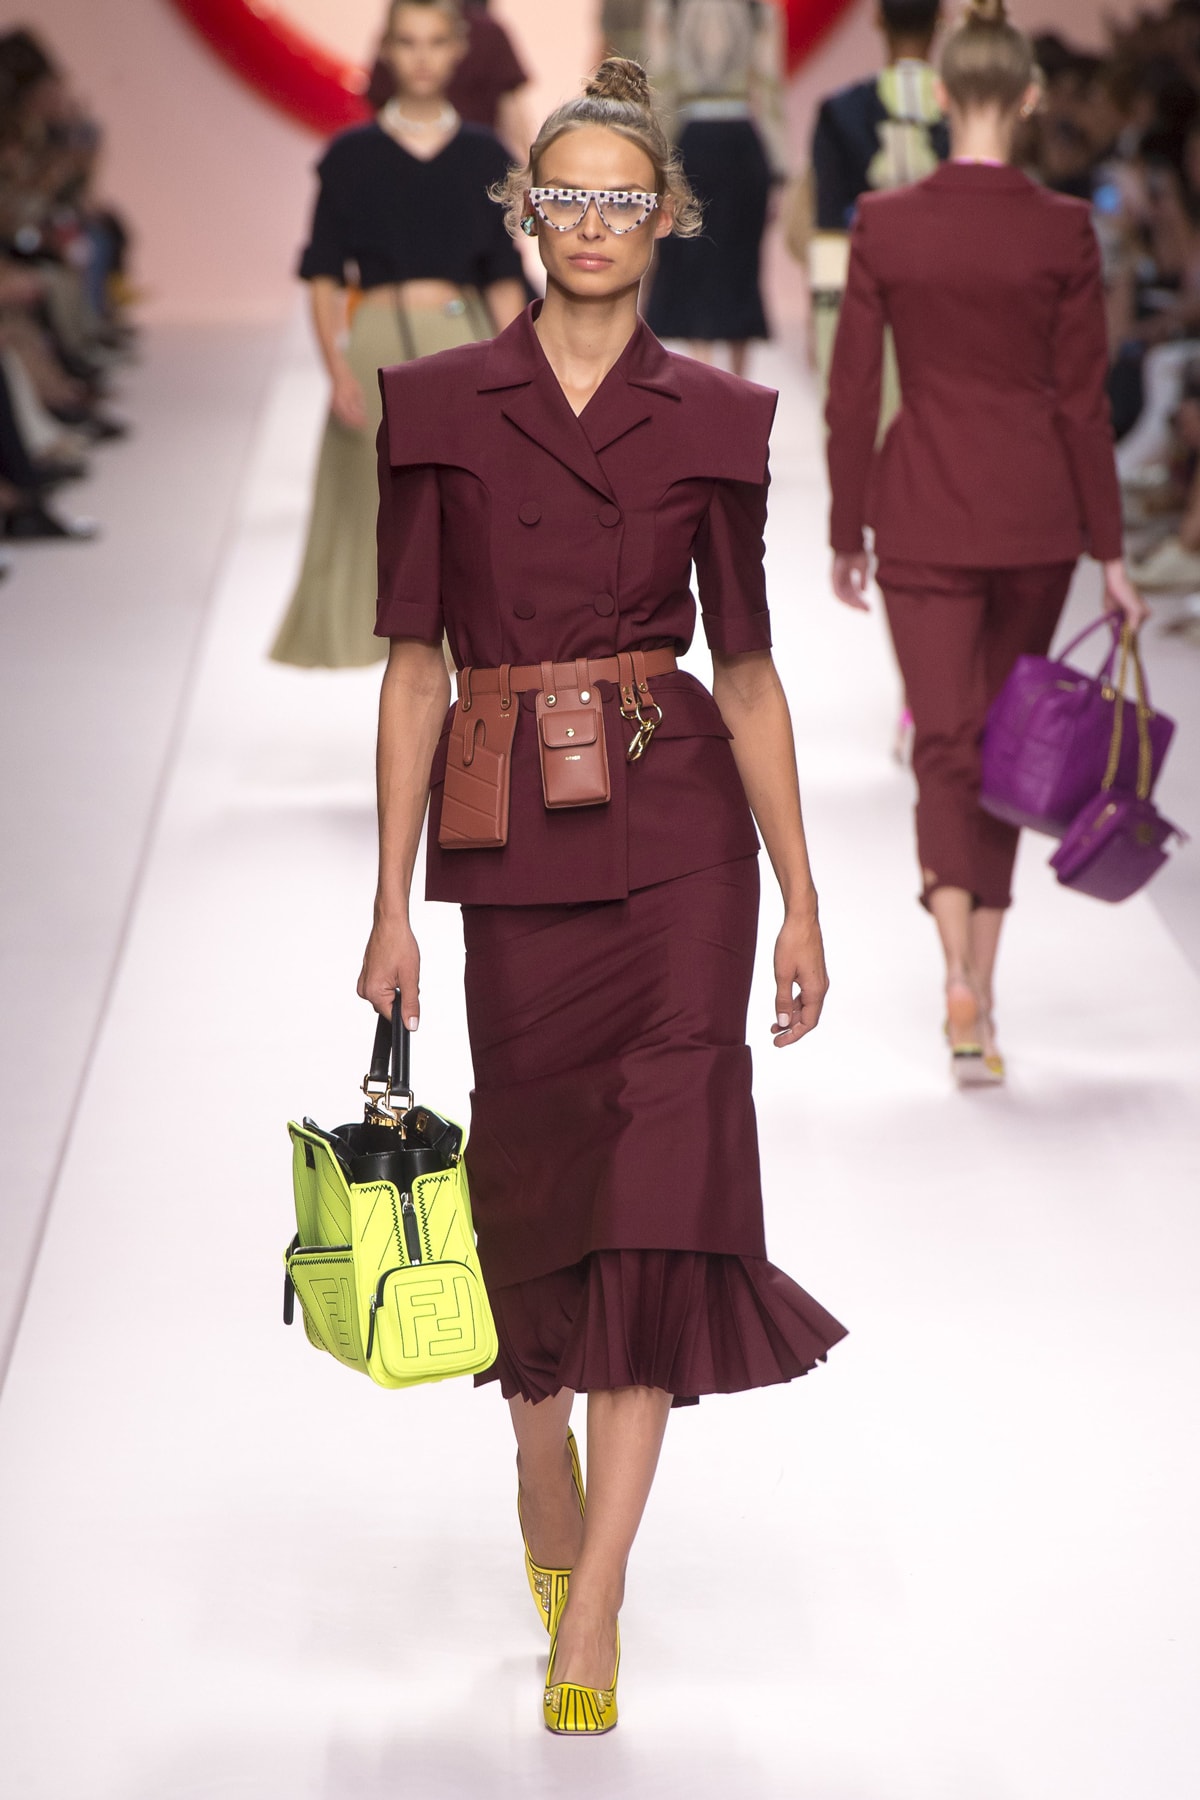 Fendi Karl Lagerfeld Spring Summer 2019 Milan Fashion Week Show Collection Jacket Skirt Maroon Belt Bag Brown